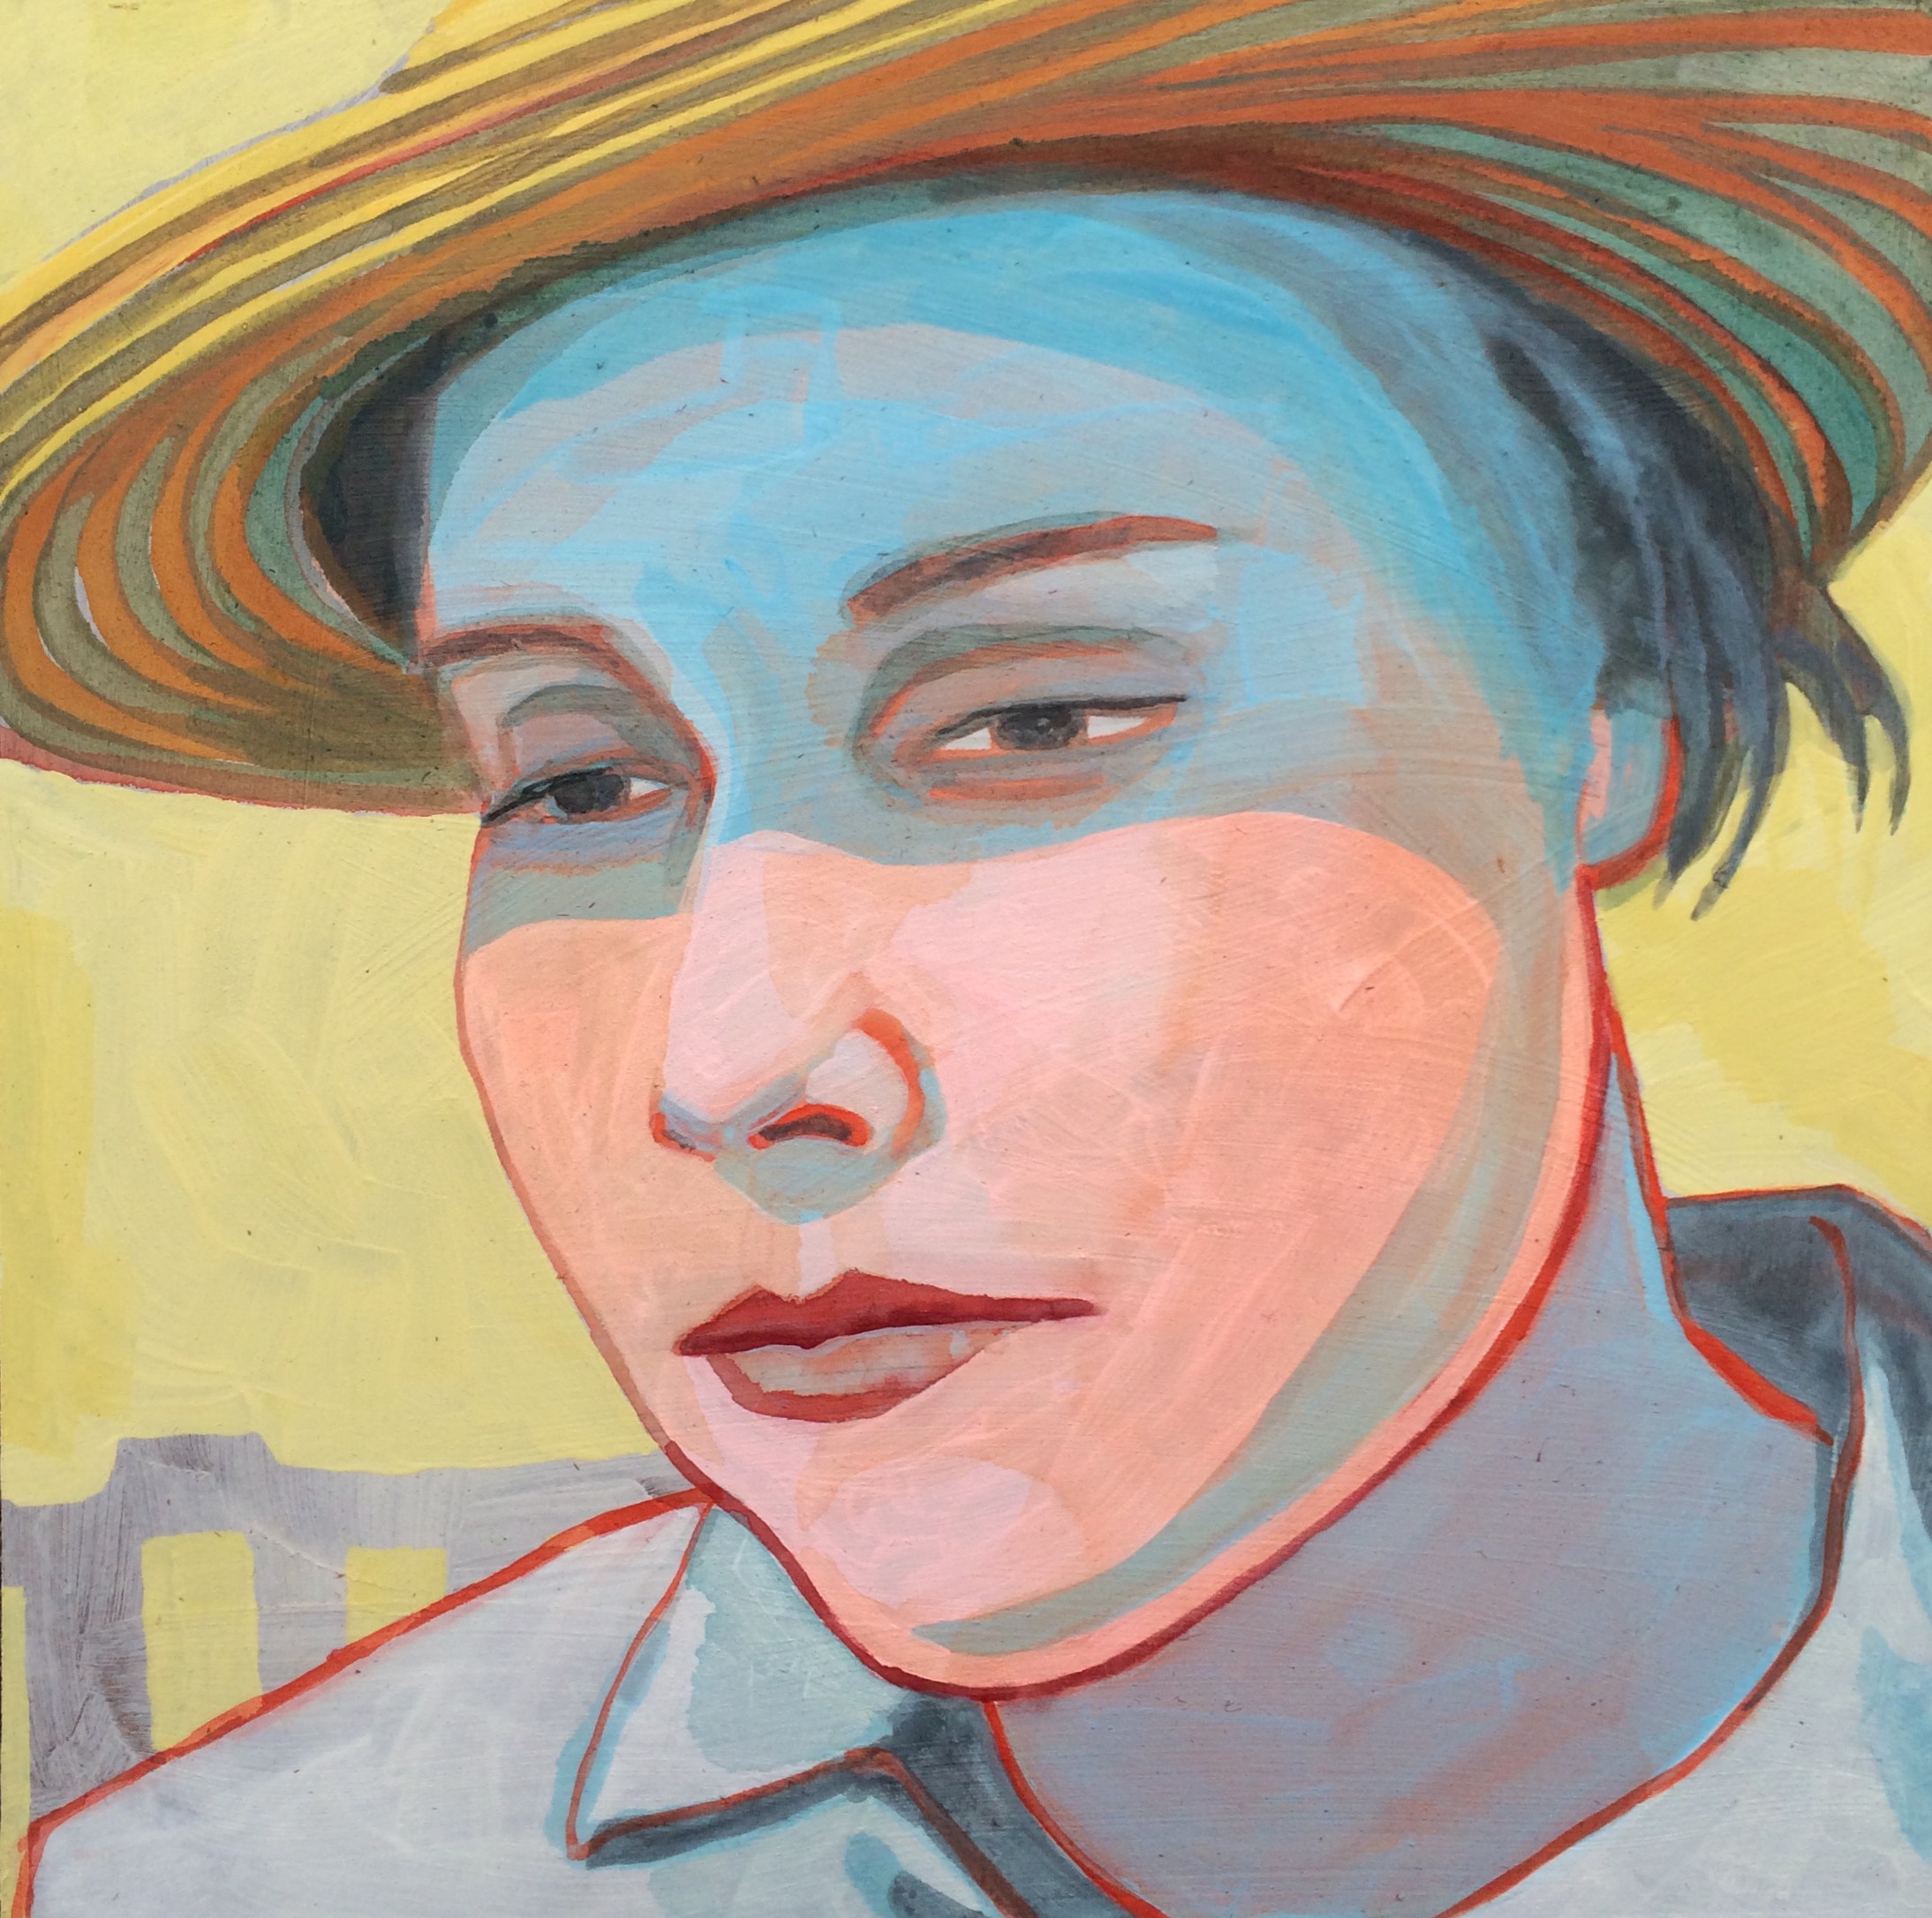   Elizabeth Bishop   acrylic and gouache on panel  8 x 8 inches, 2015 